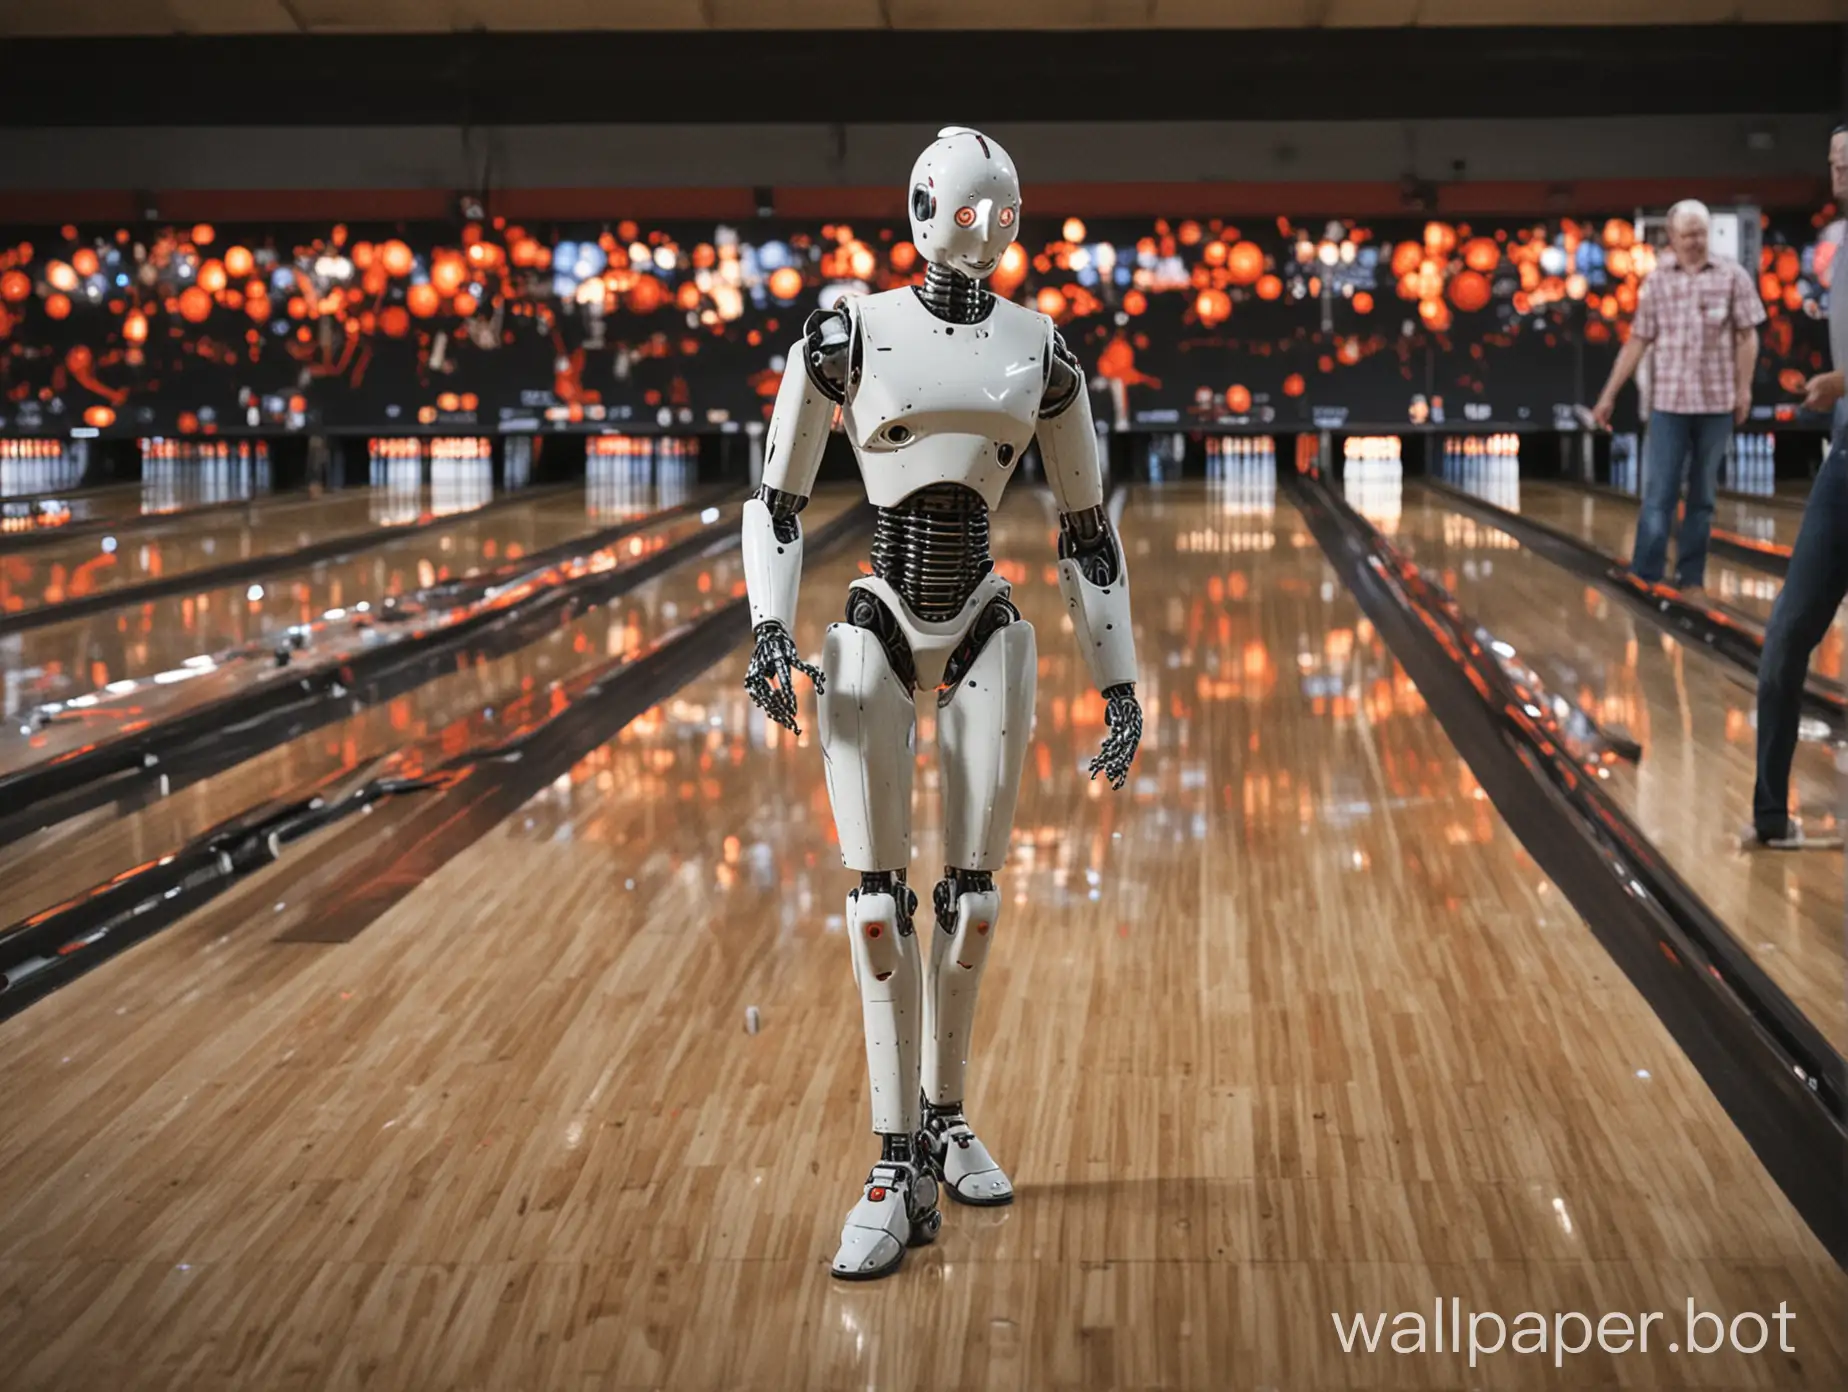 Futuristic-Tenpin-Bowling-Robot-Advanced-Technology-Strikes-the-Lanes